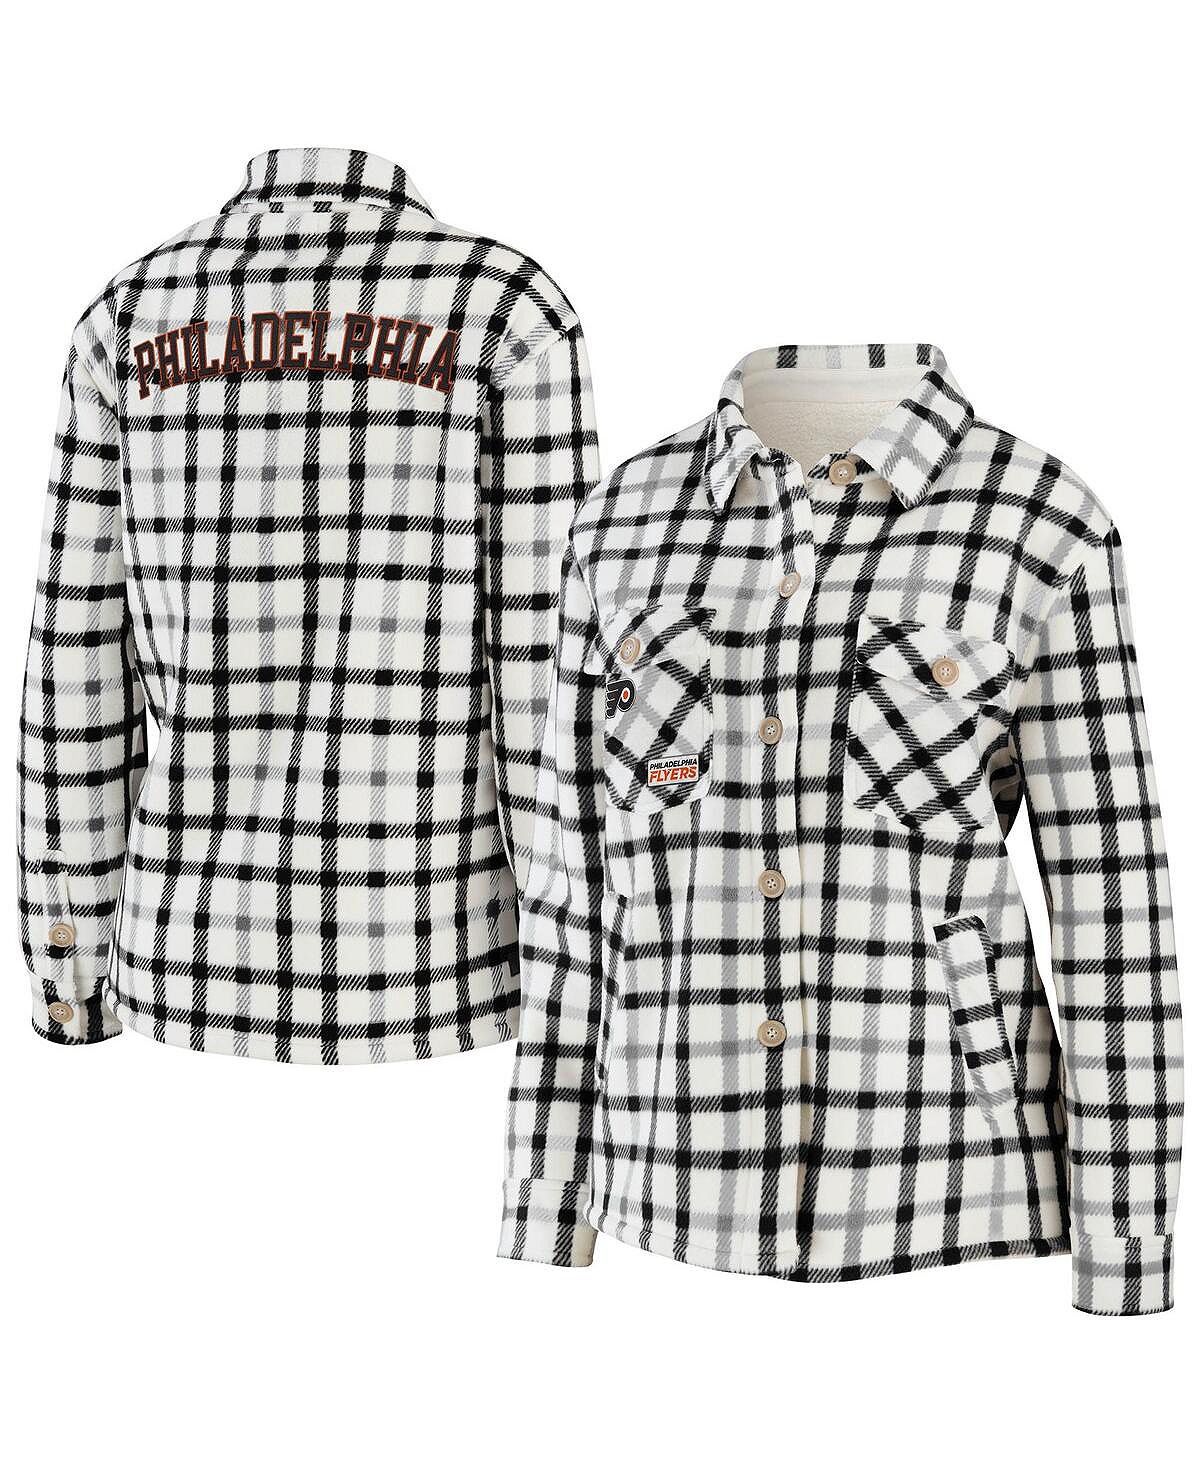 цена Женская овсяная куртка-рубашка на пуговицах в клетку Philadelphia Flyers WEAR by Erin Andrews